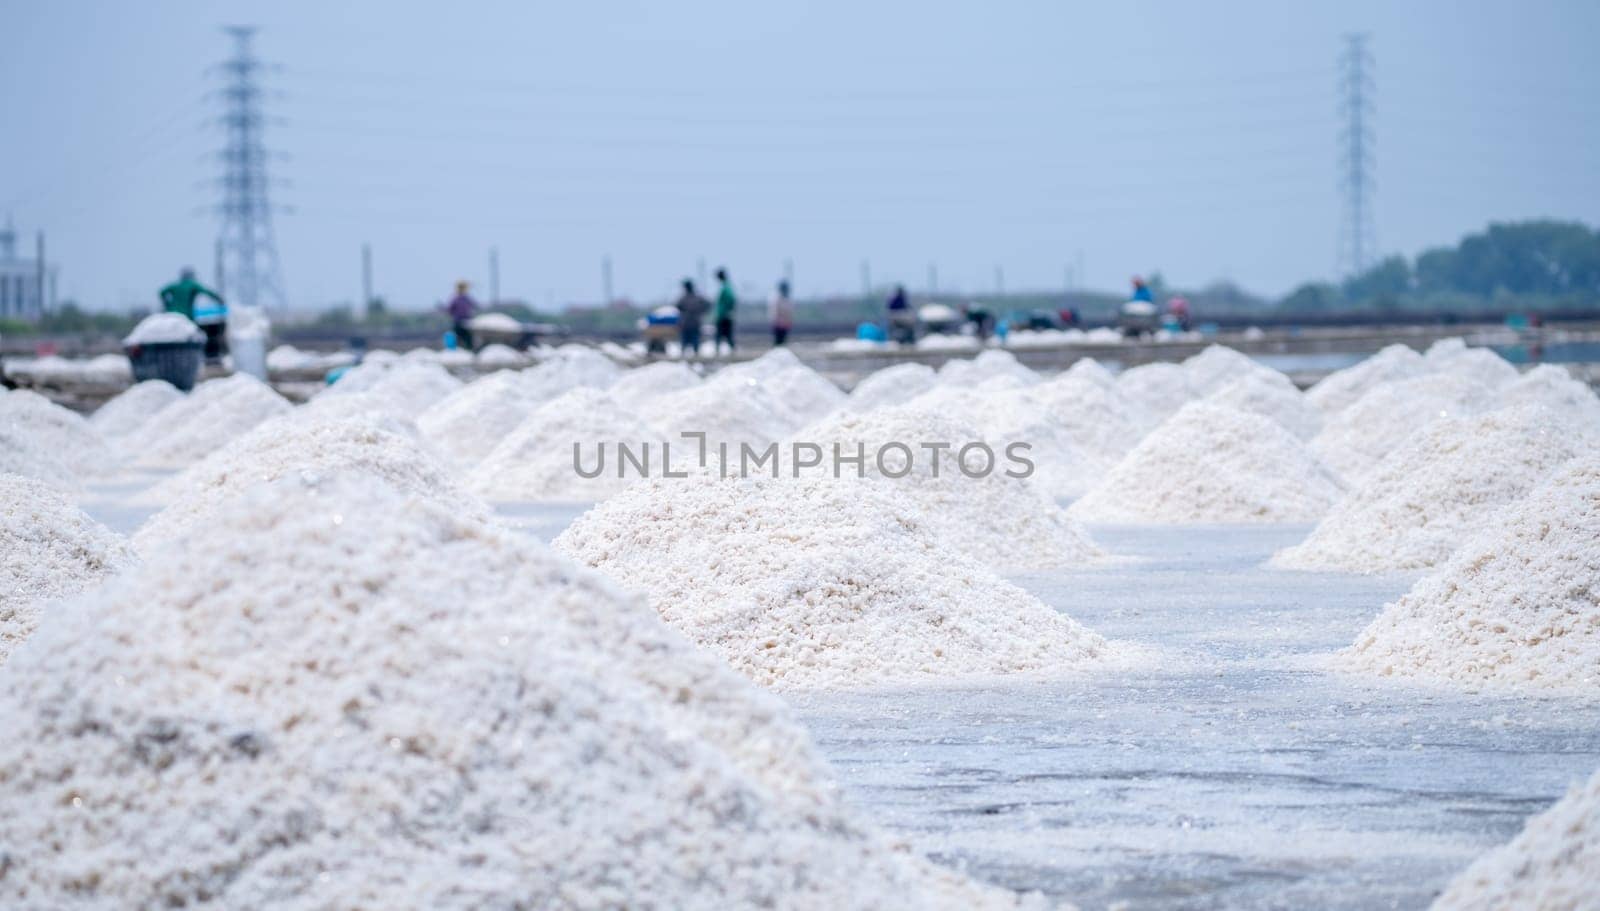 Sea salt farm and blur worker working on farm. Brine salt. Raw material of salt industrial. Sodium Chloride. Evaporation and crystallization of sea water. White salt harvesting. Agriculture industry.